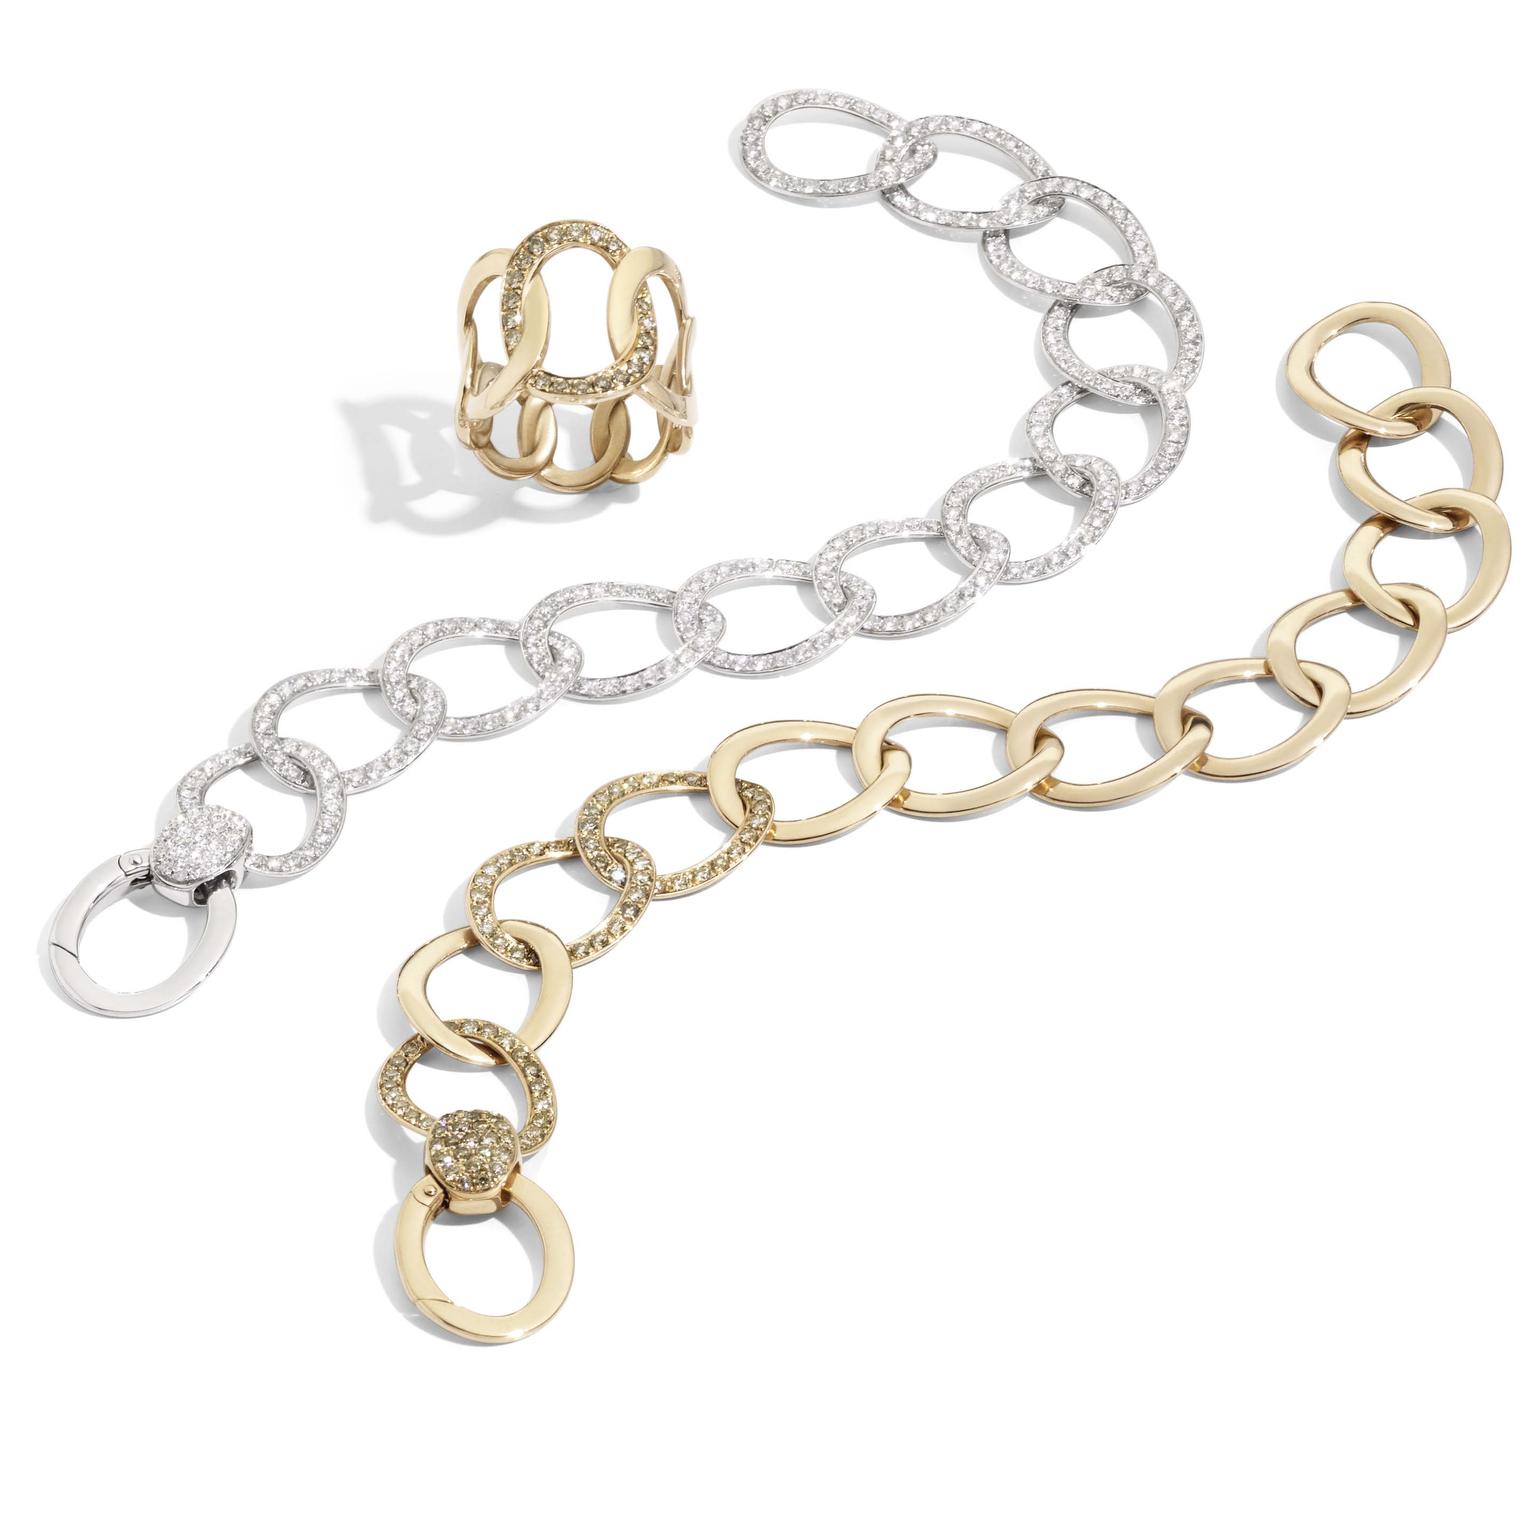 Pomellato Brera rose and white gold ring and bracelets